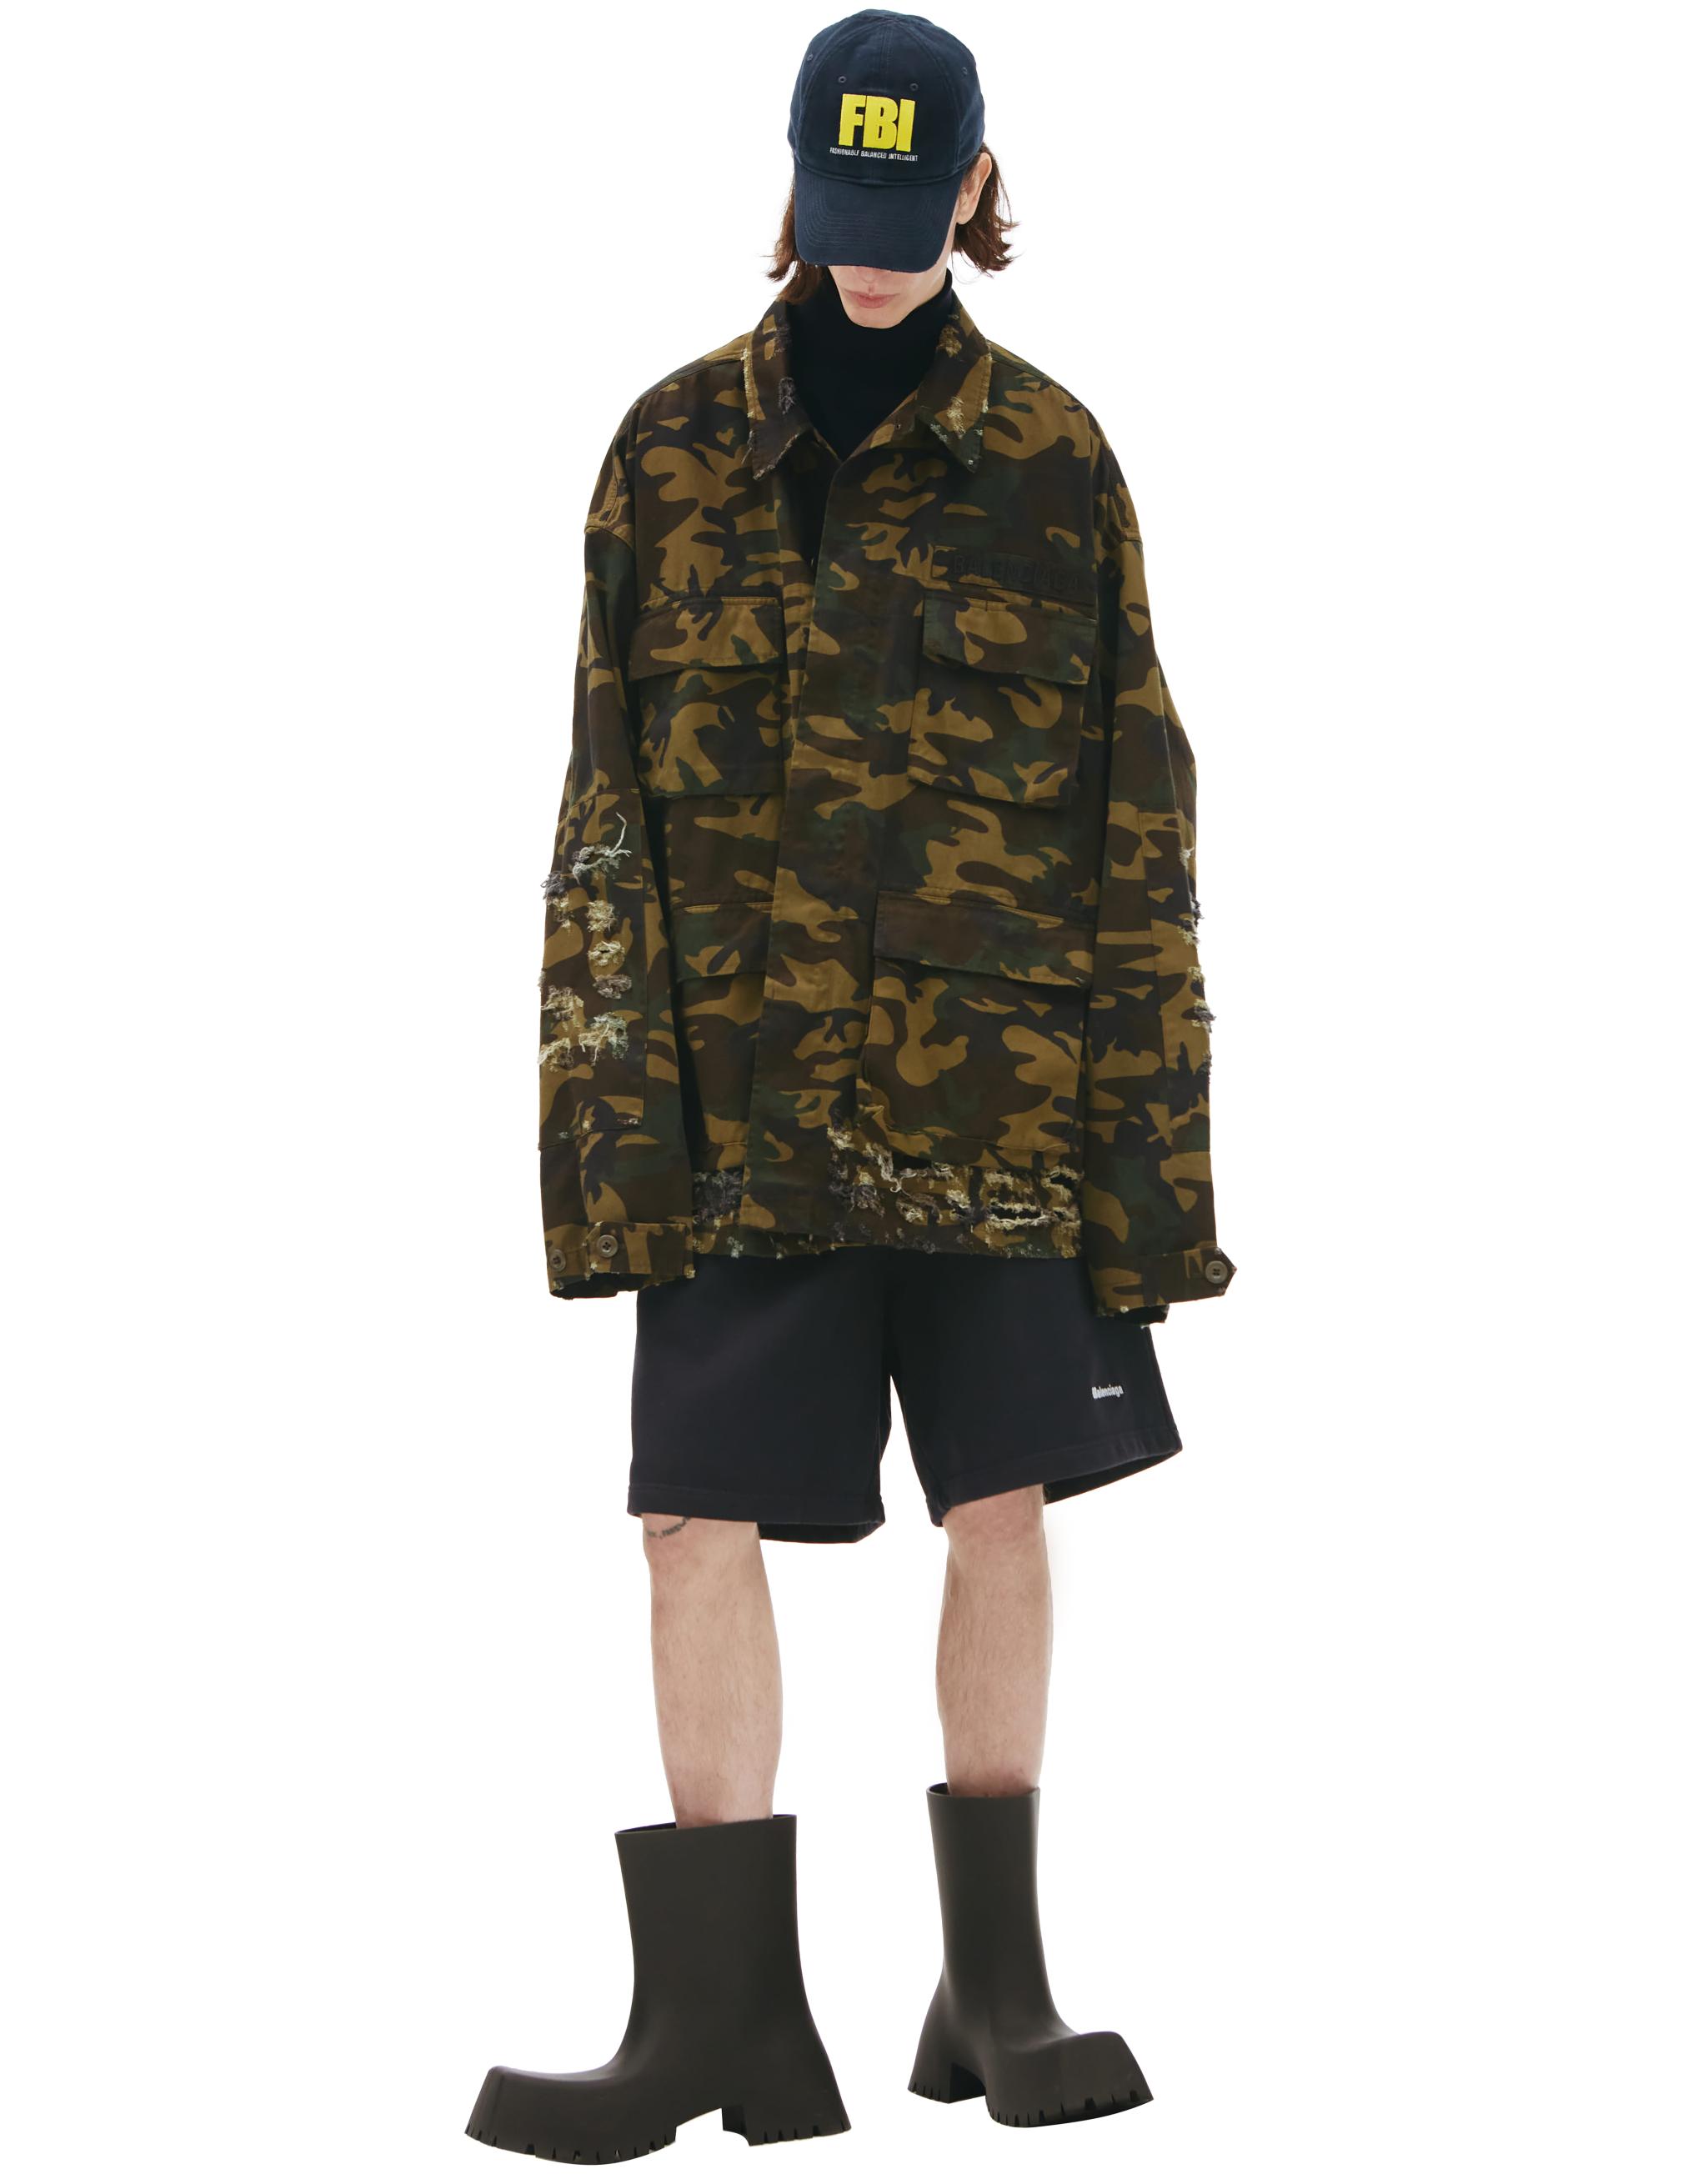 Balenciaga Cotton Camouflage Print Army Jacket for Men - Lyst